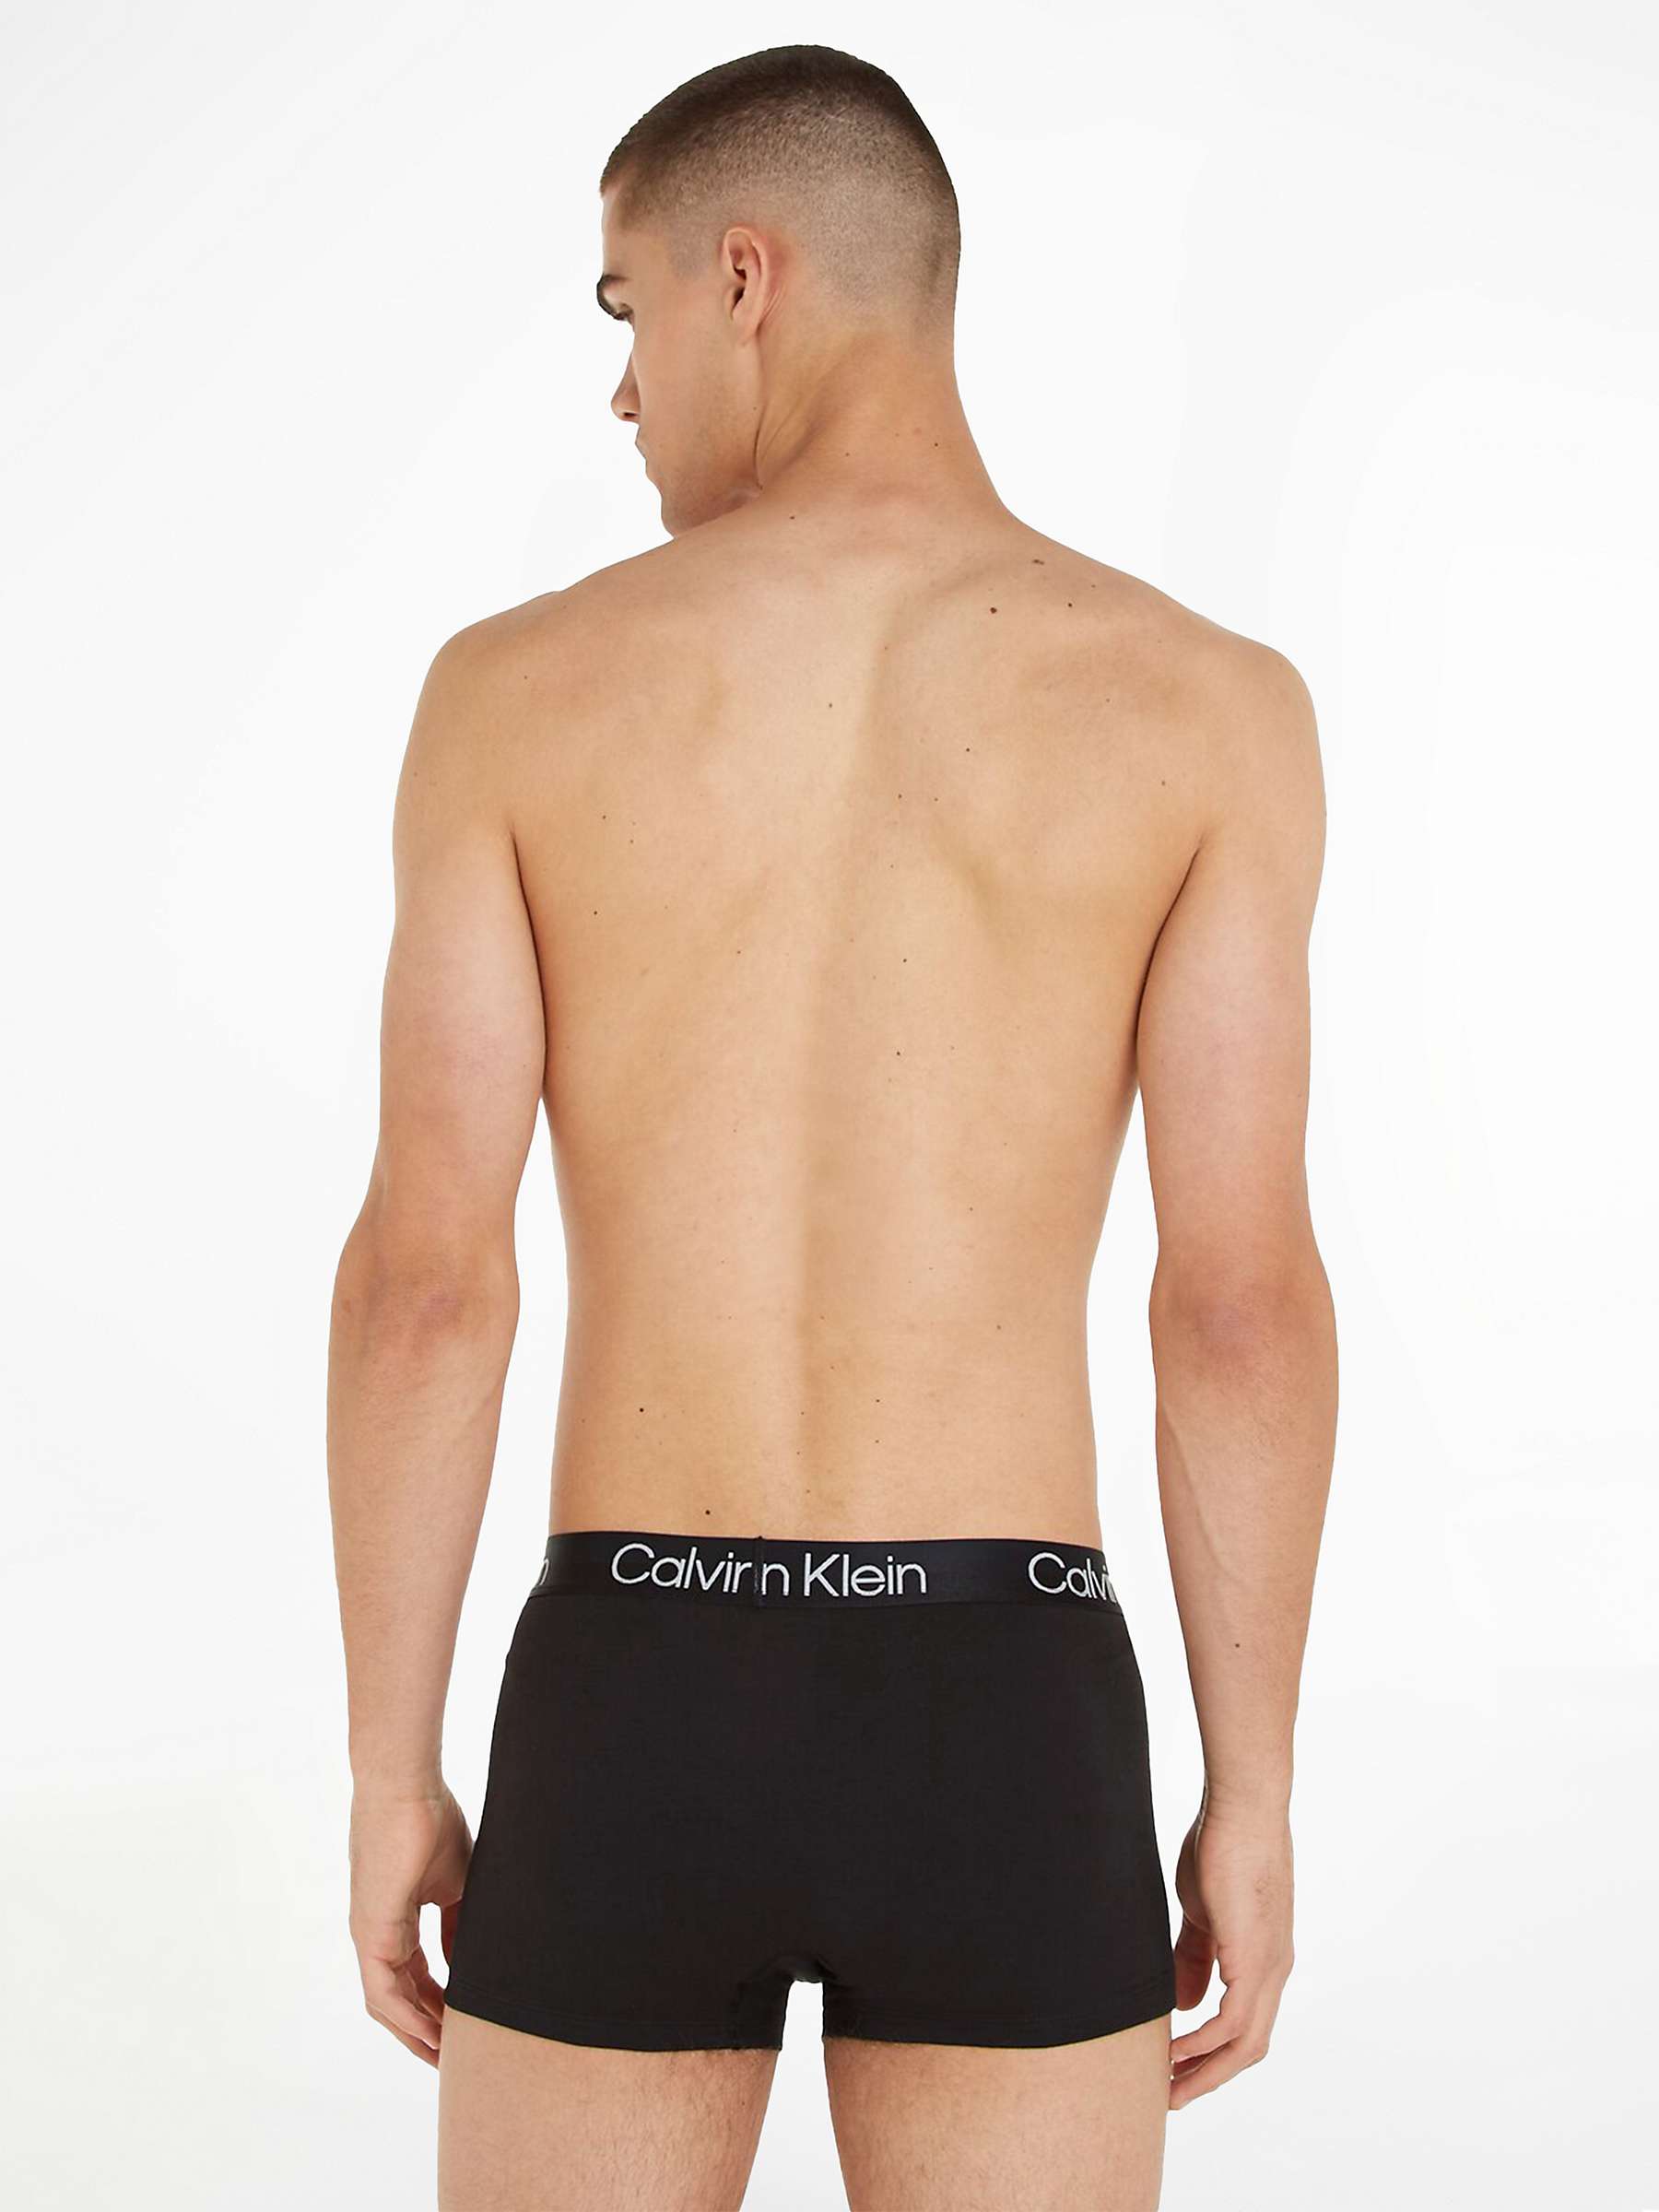 Buy Calvin Klein Stretch Cotton Trunks, Pack of 3, Black Online at johnlewis.com